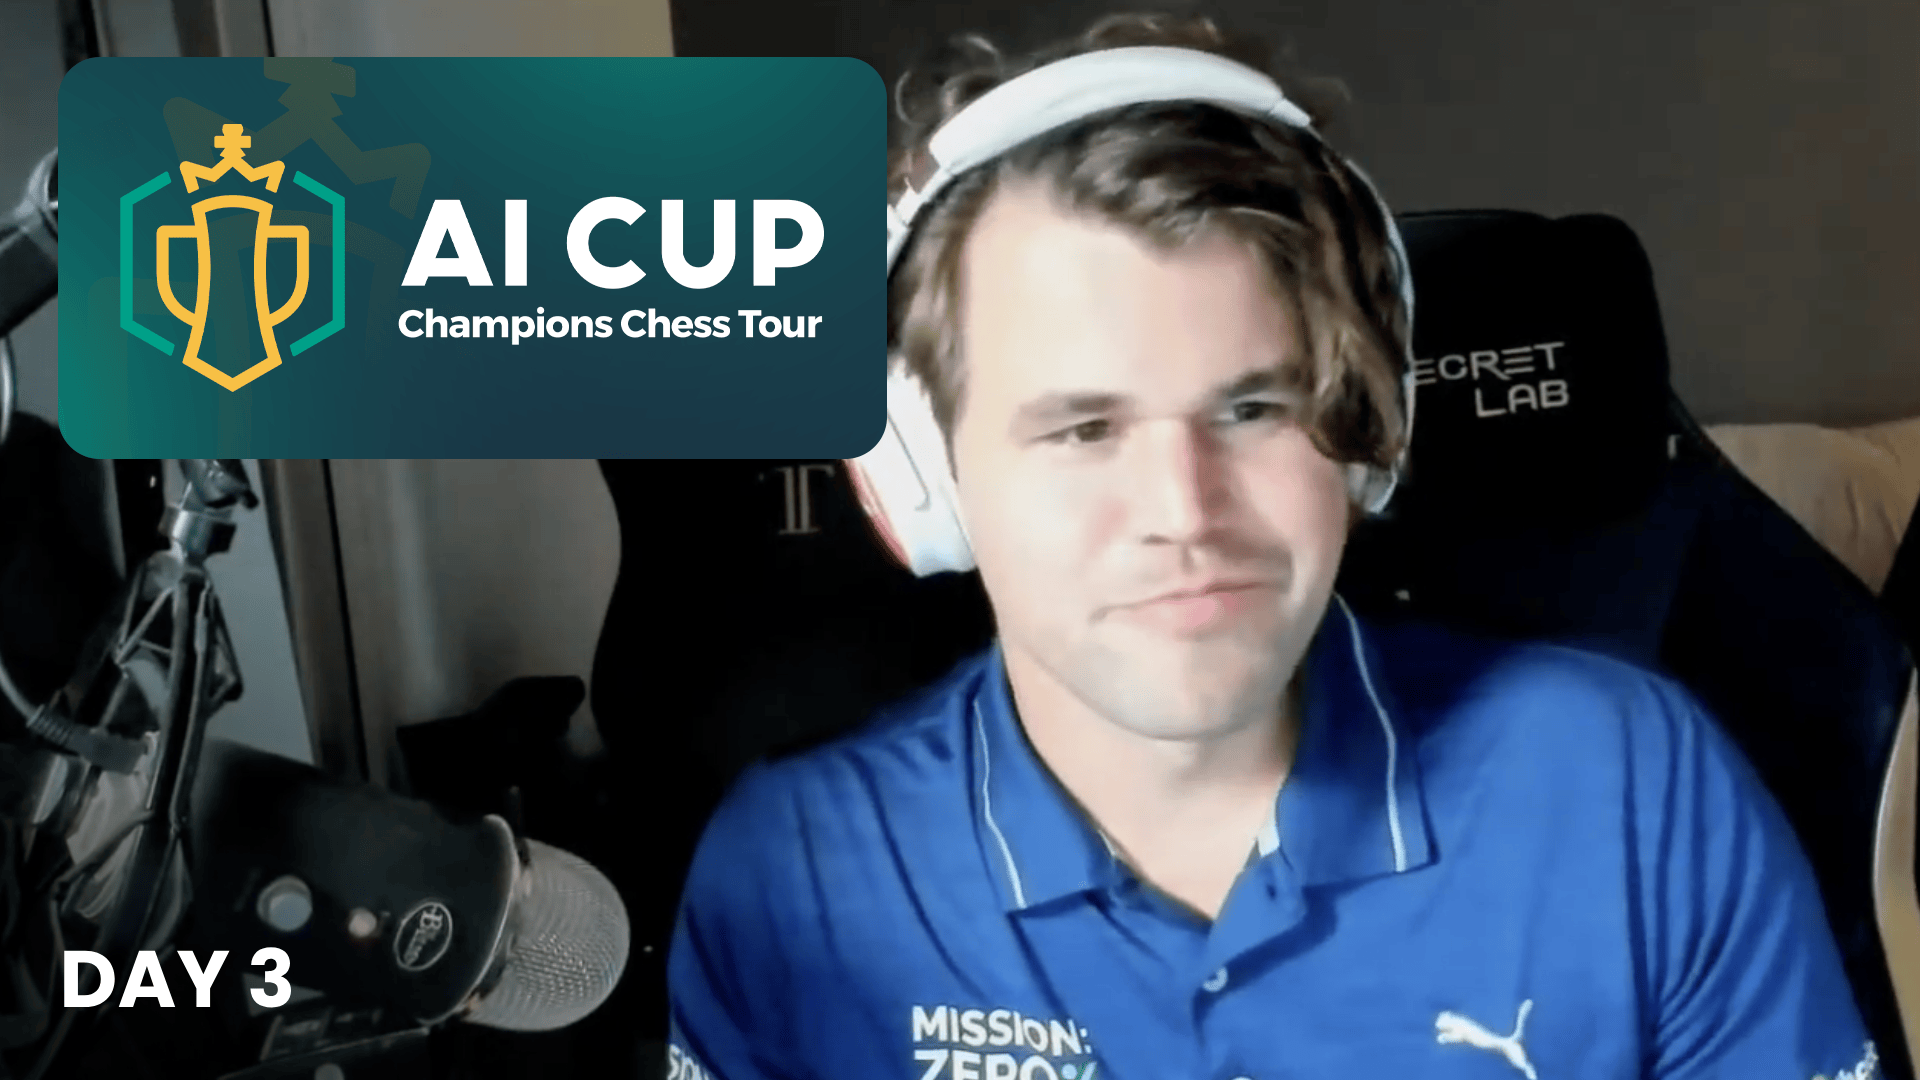 MVL beats Carlsen twice, wins AI Cup